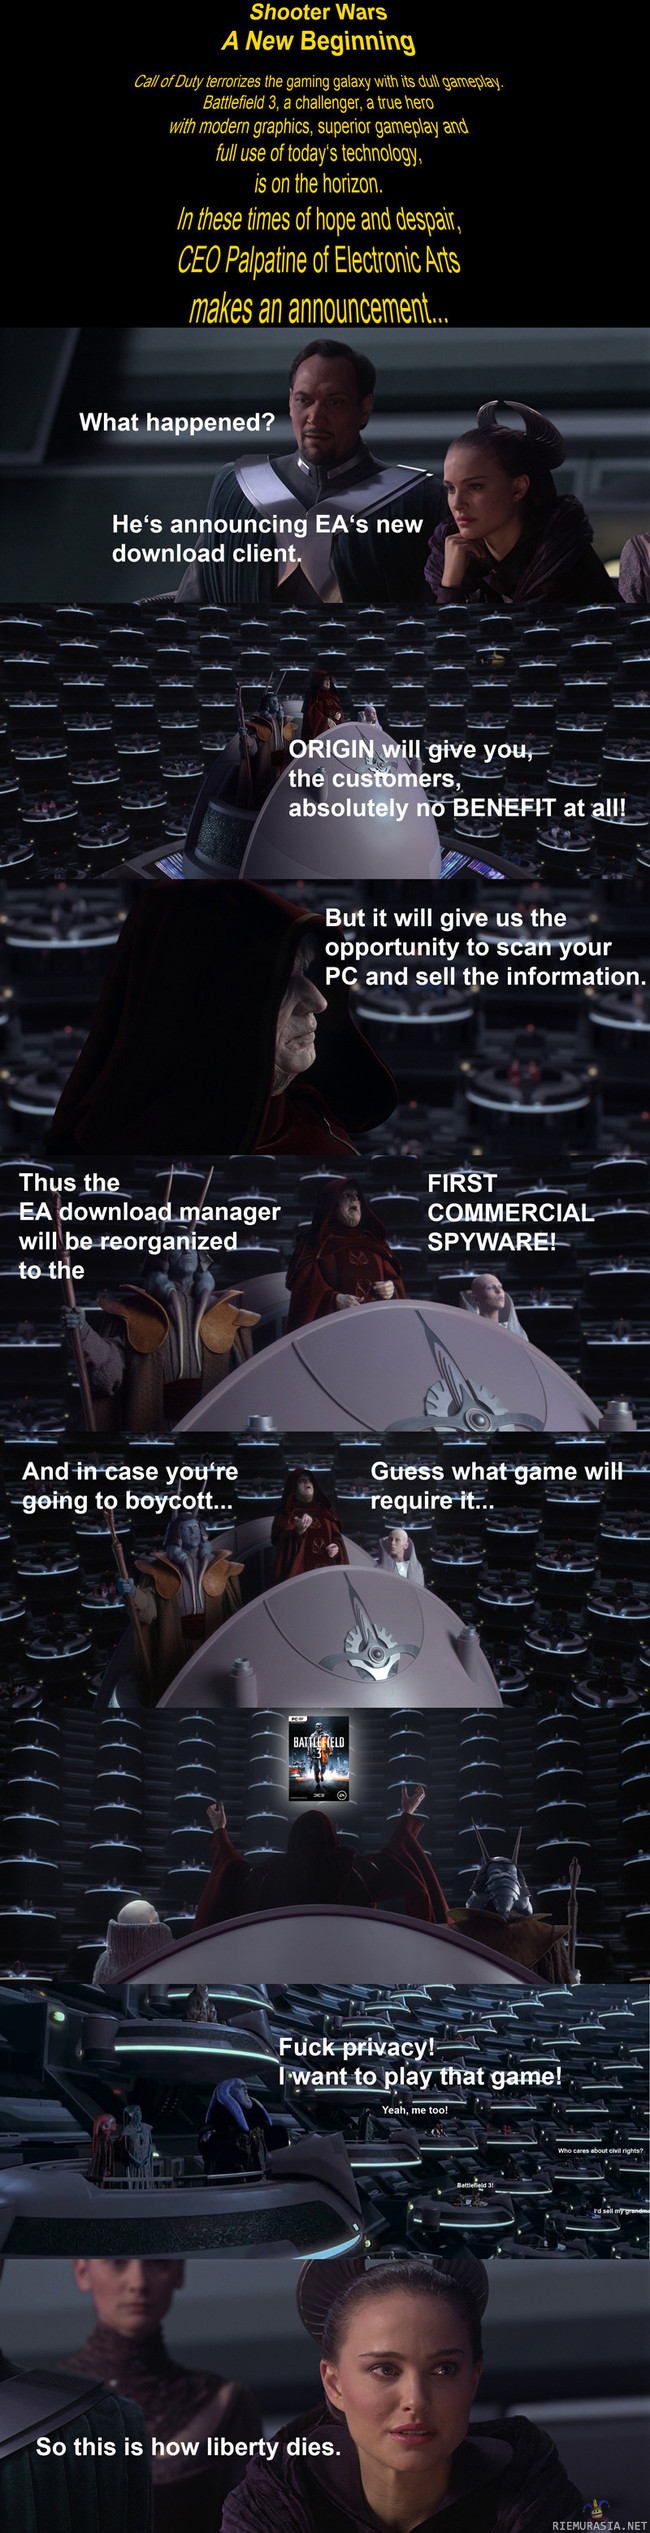 EA = The Dark Side